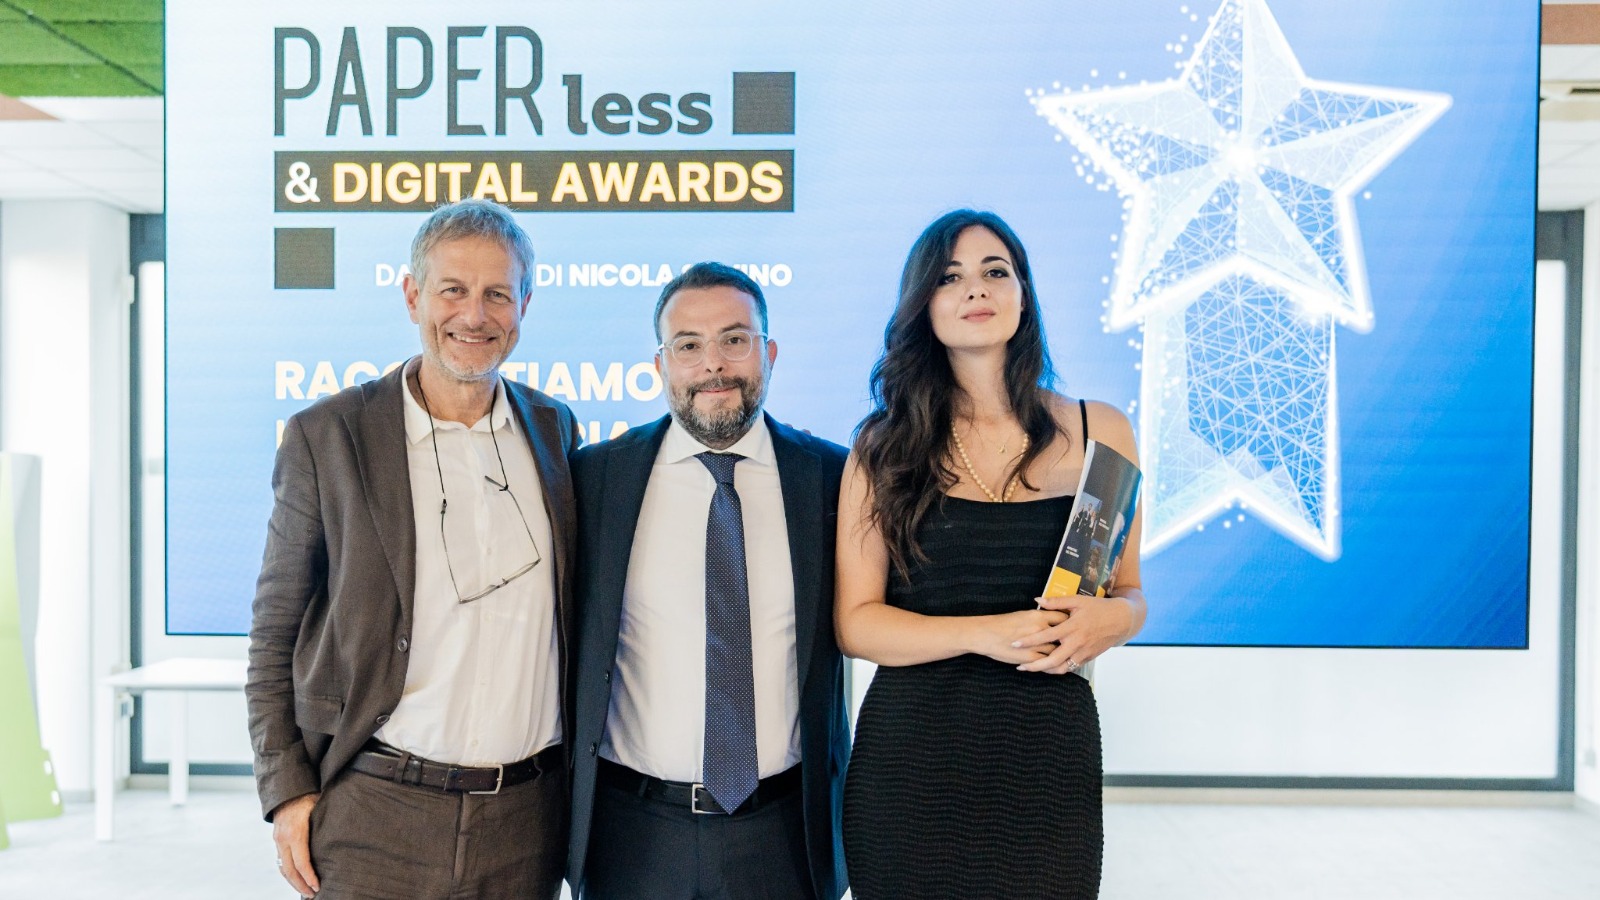 A Salerno la II edizione di “Paperless & Digital Awards”